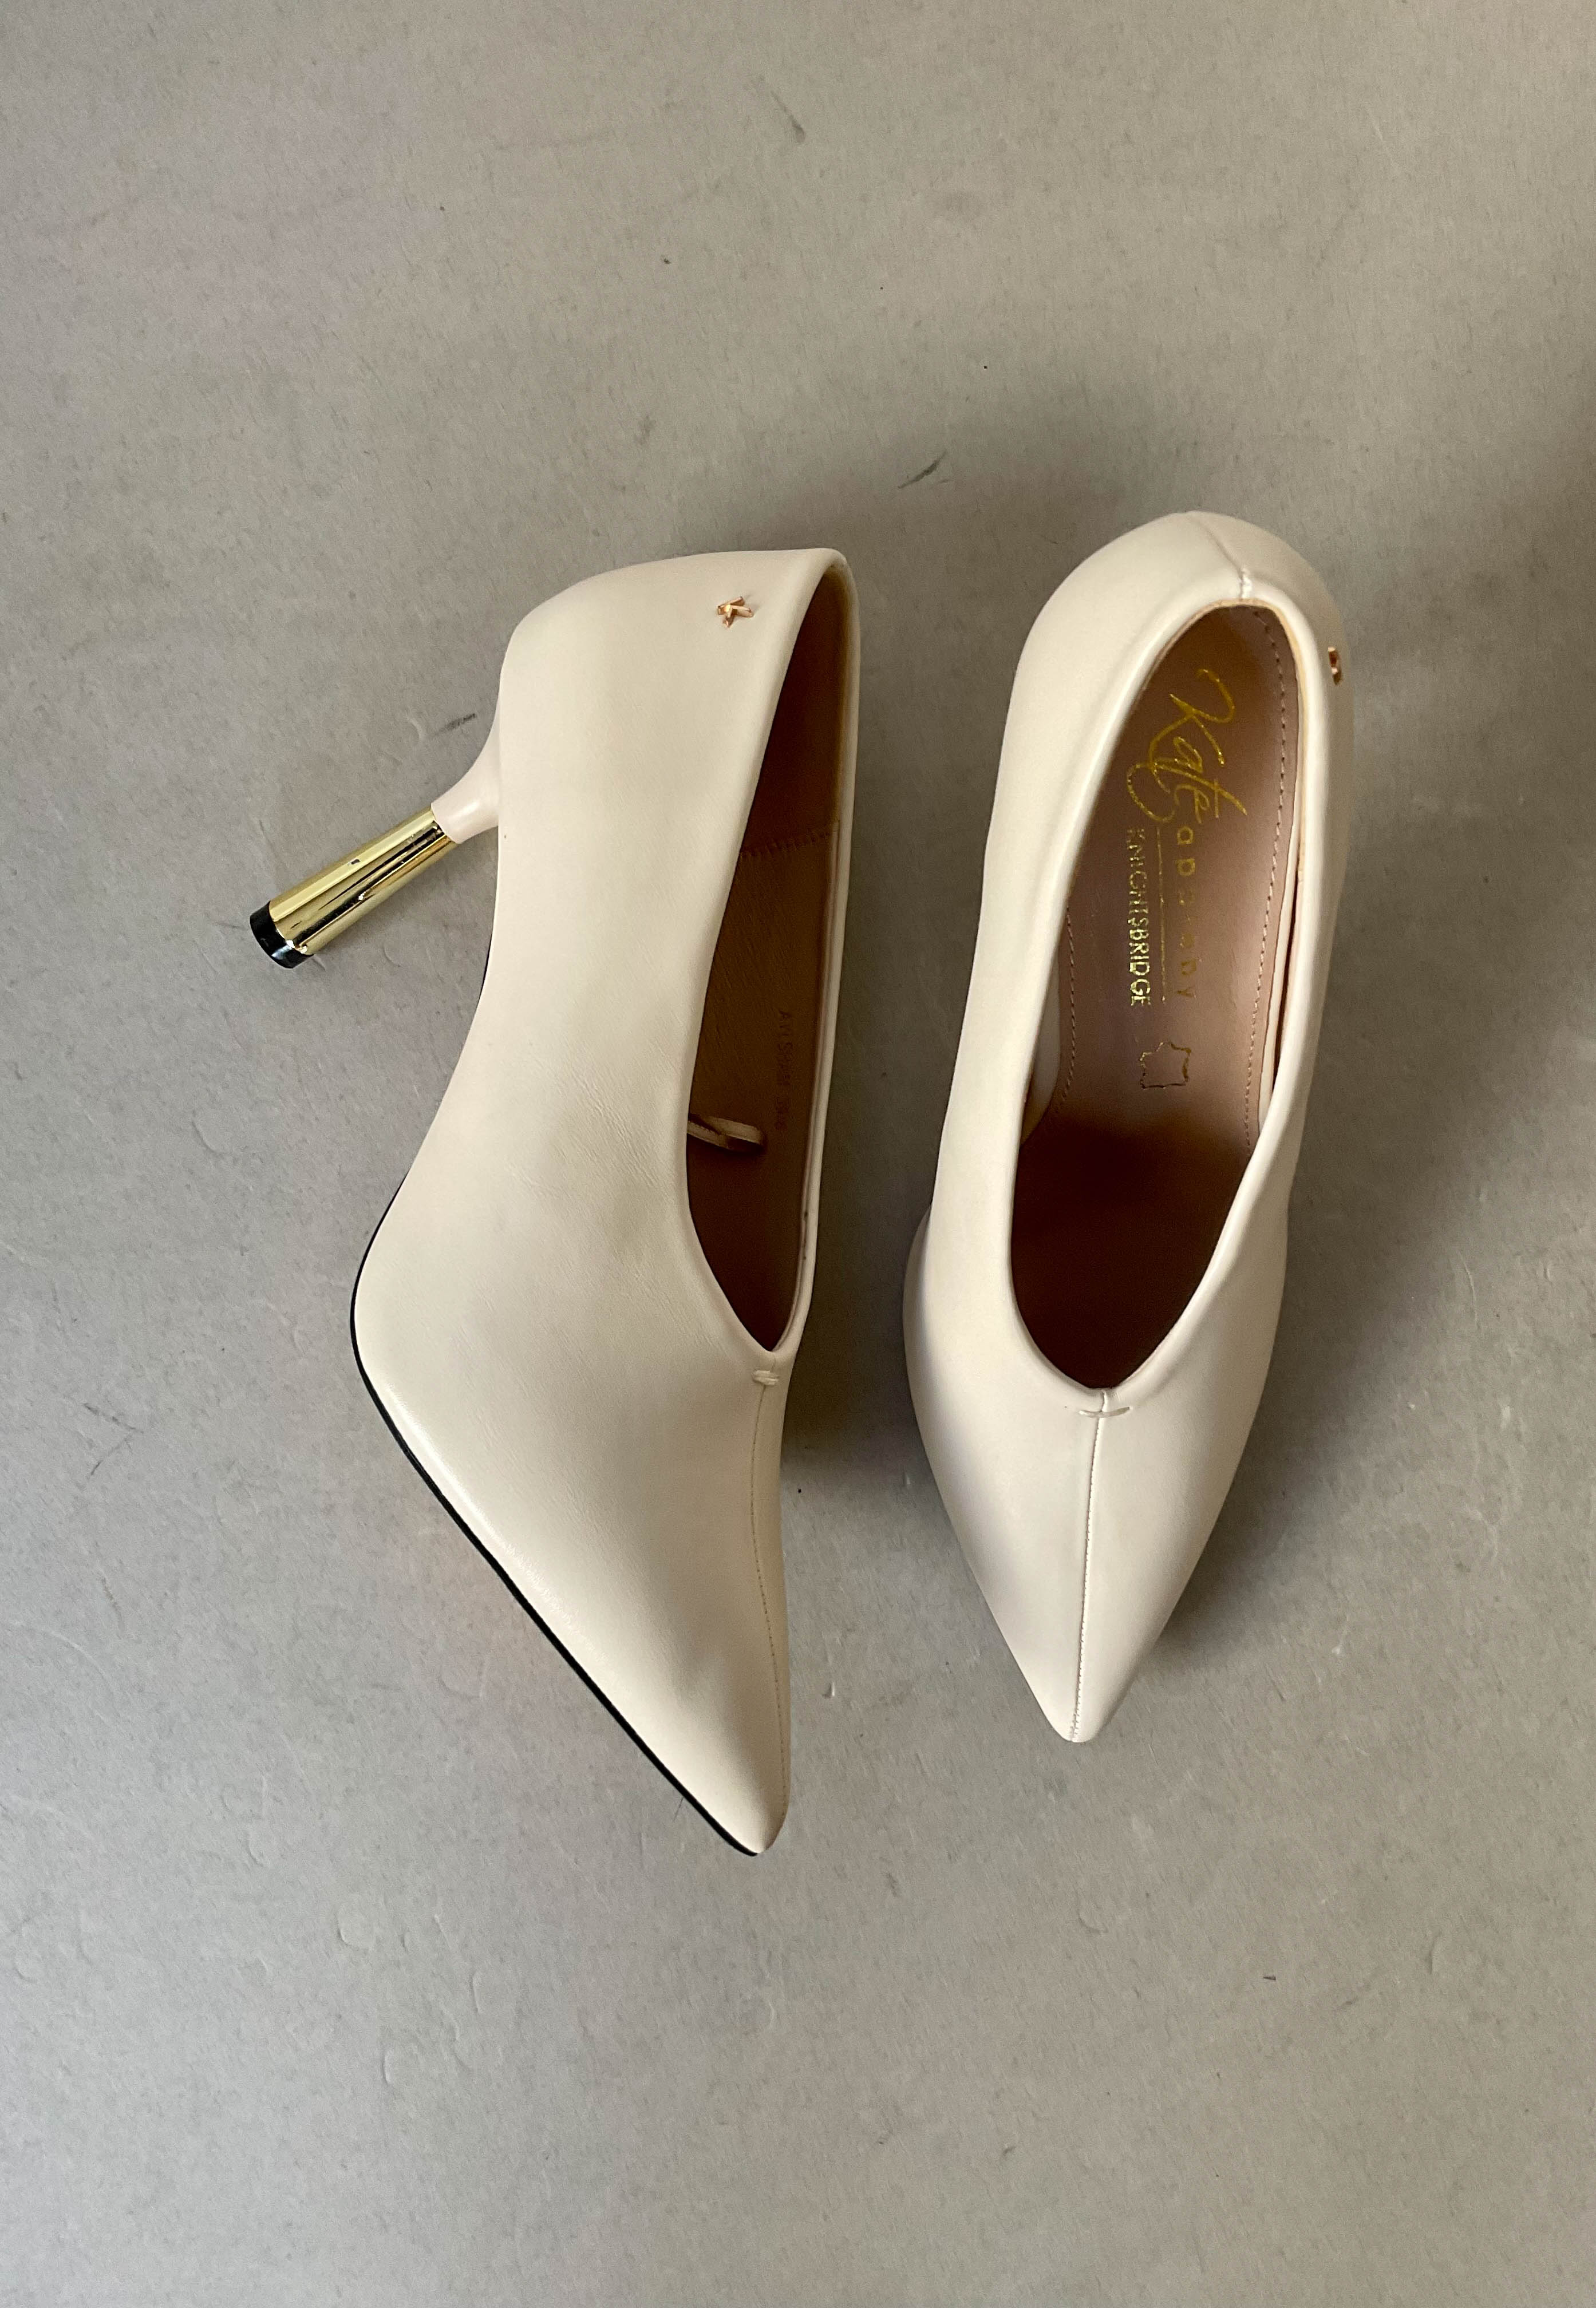 cream high heels